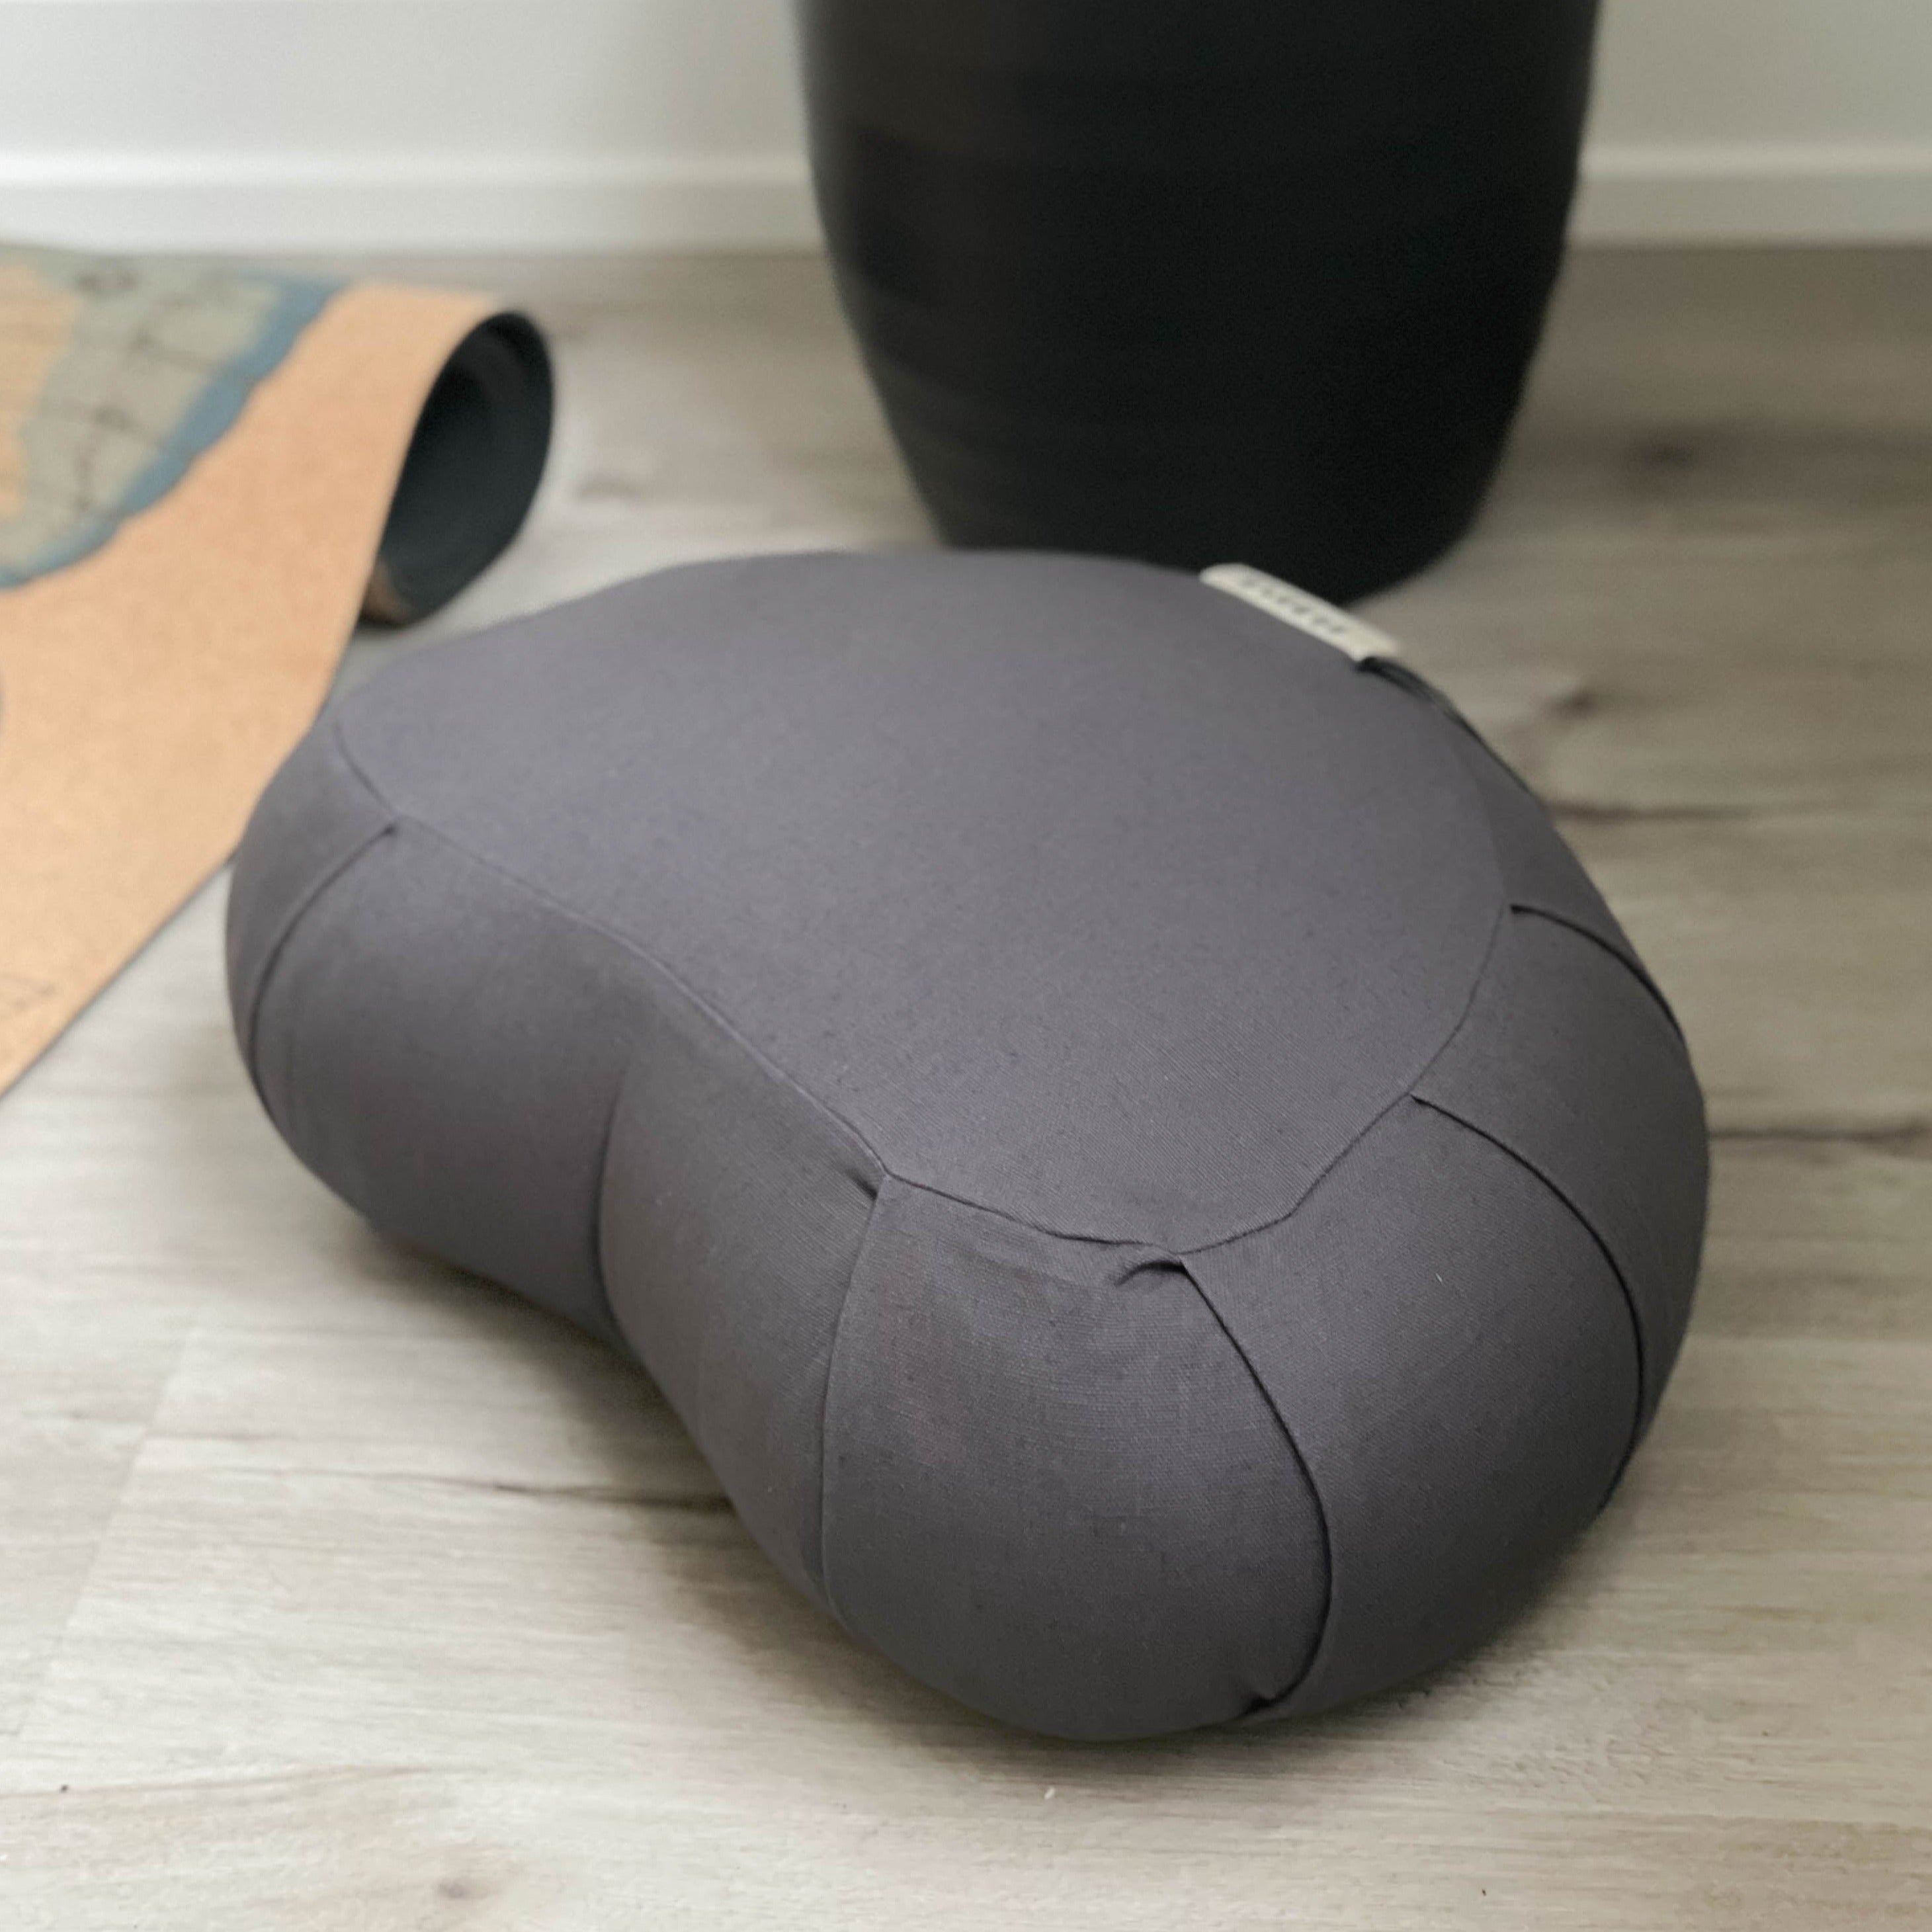 Buy Organic Crescent Meditation Cushions - 4 Pack, Meditation Cushions